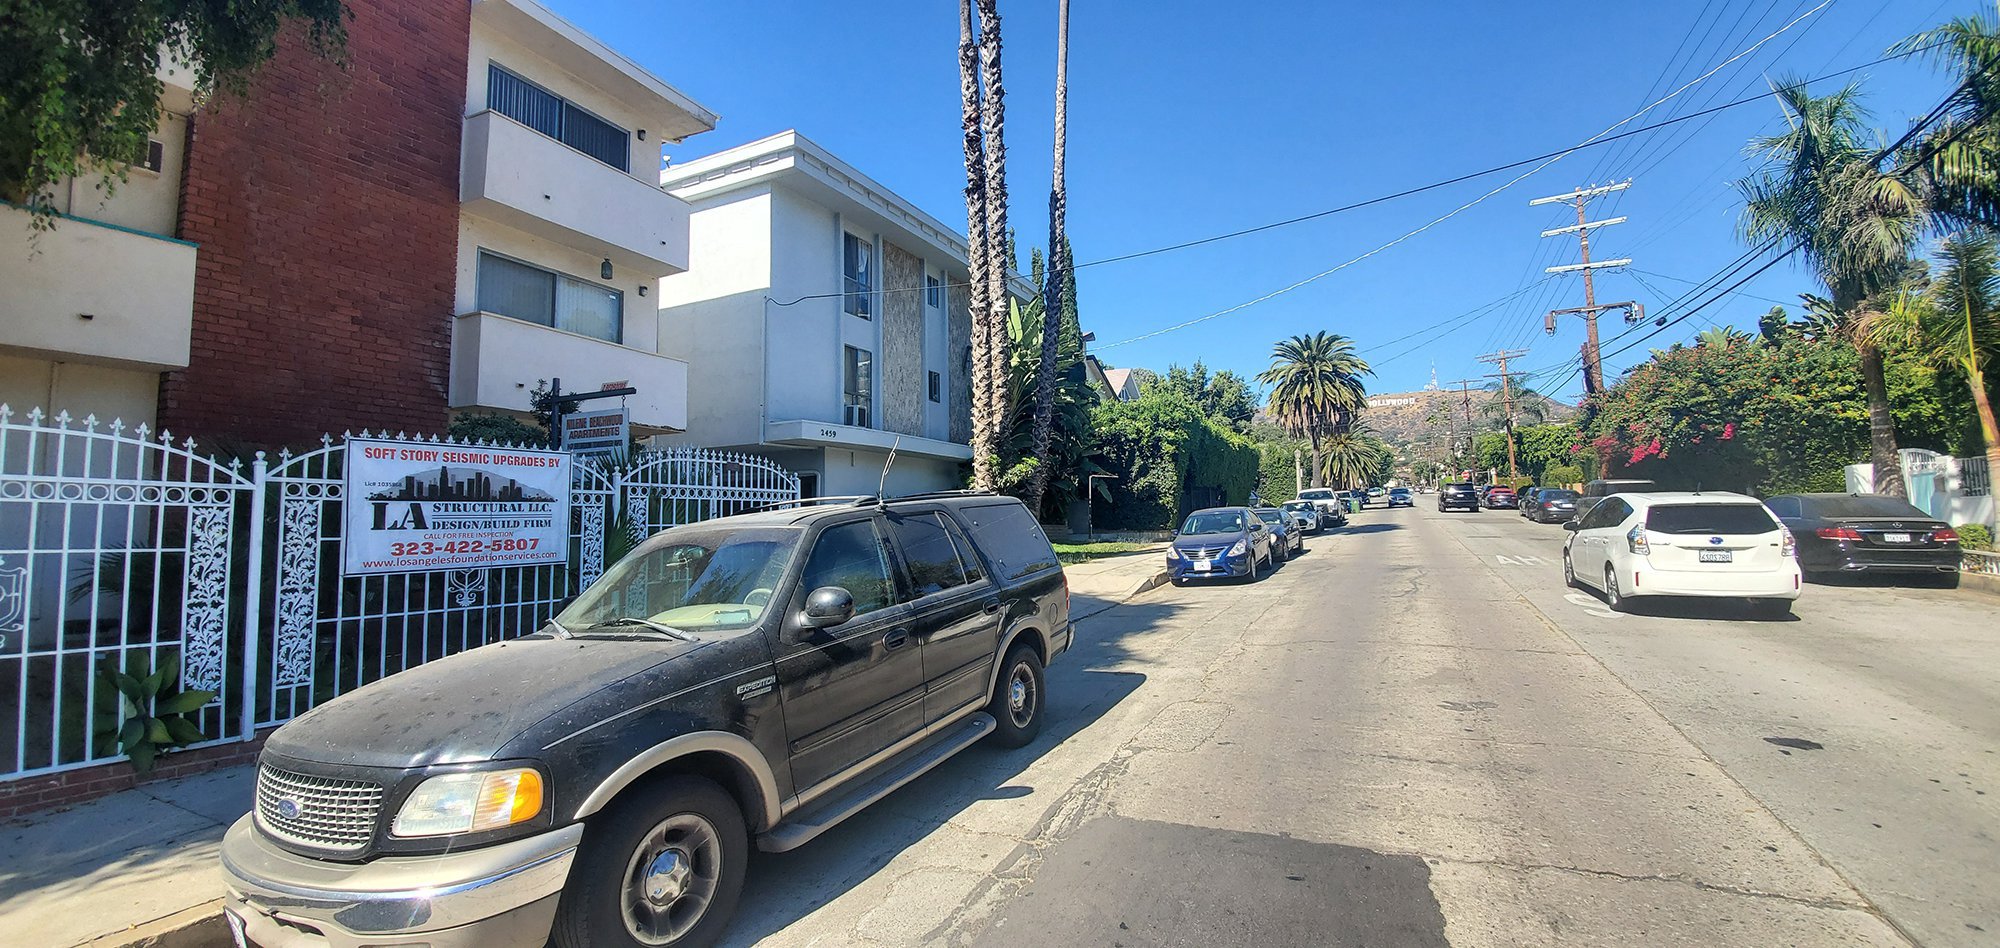 Los Angeles Soft Story Retrofit Apartment